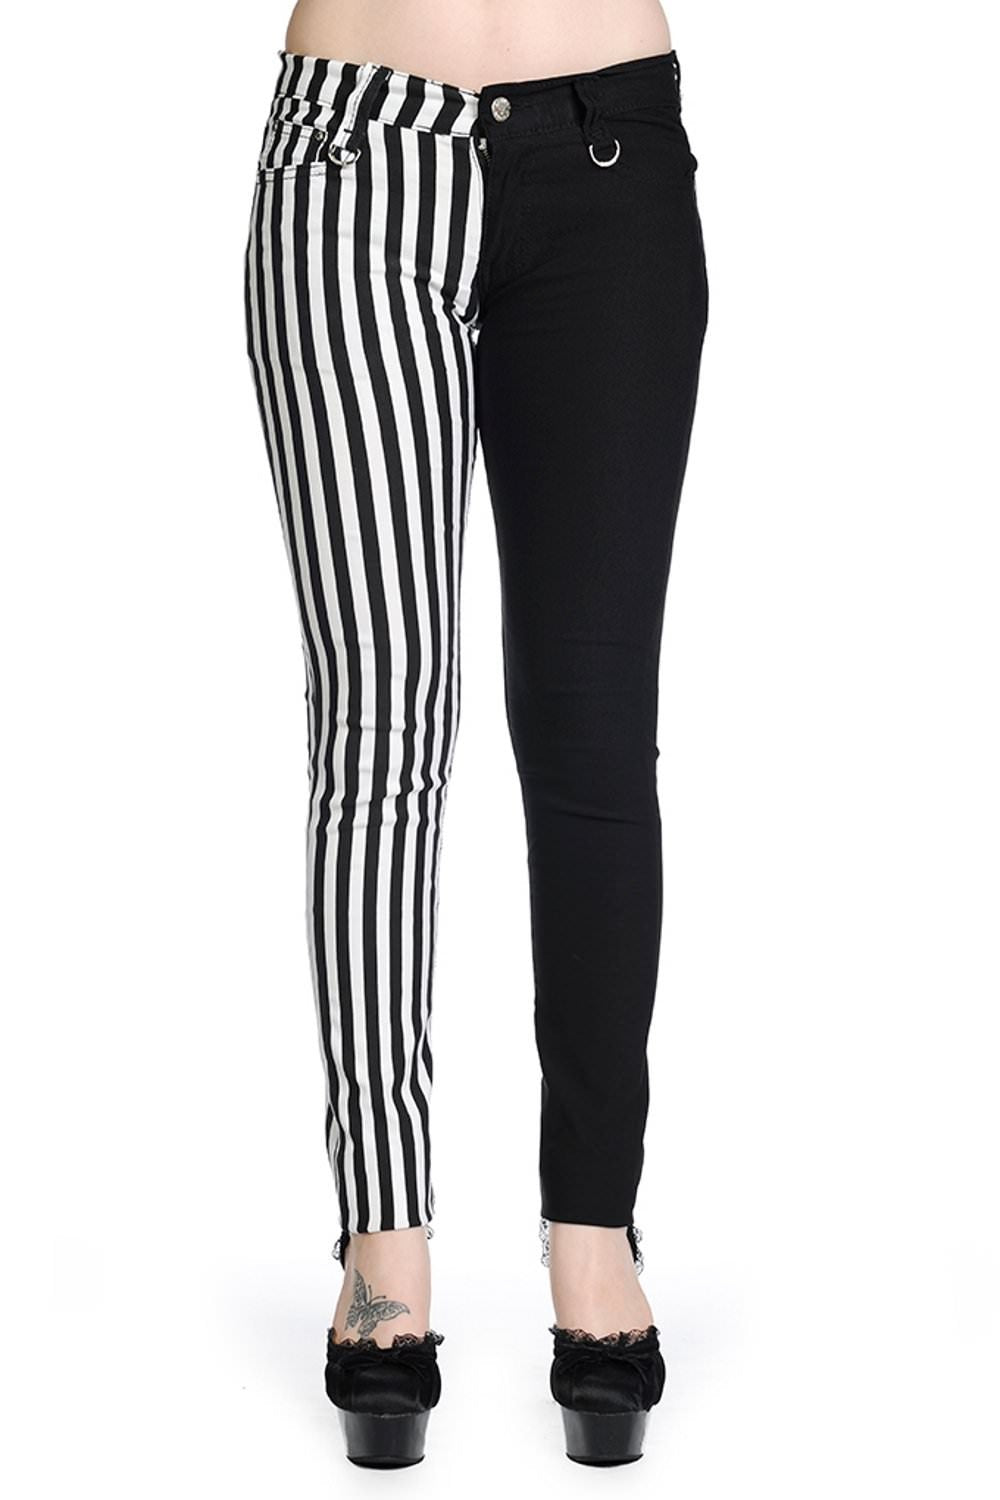 Women's Pants Striped Pants Black and White M - Walmart.com